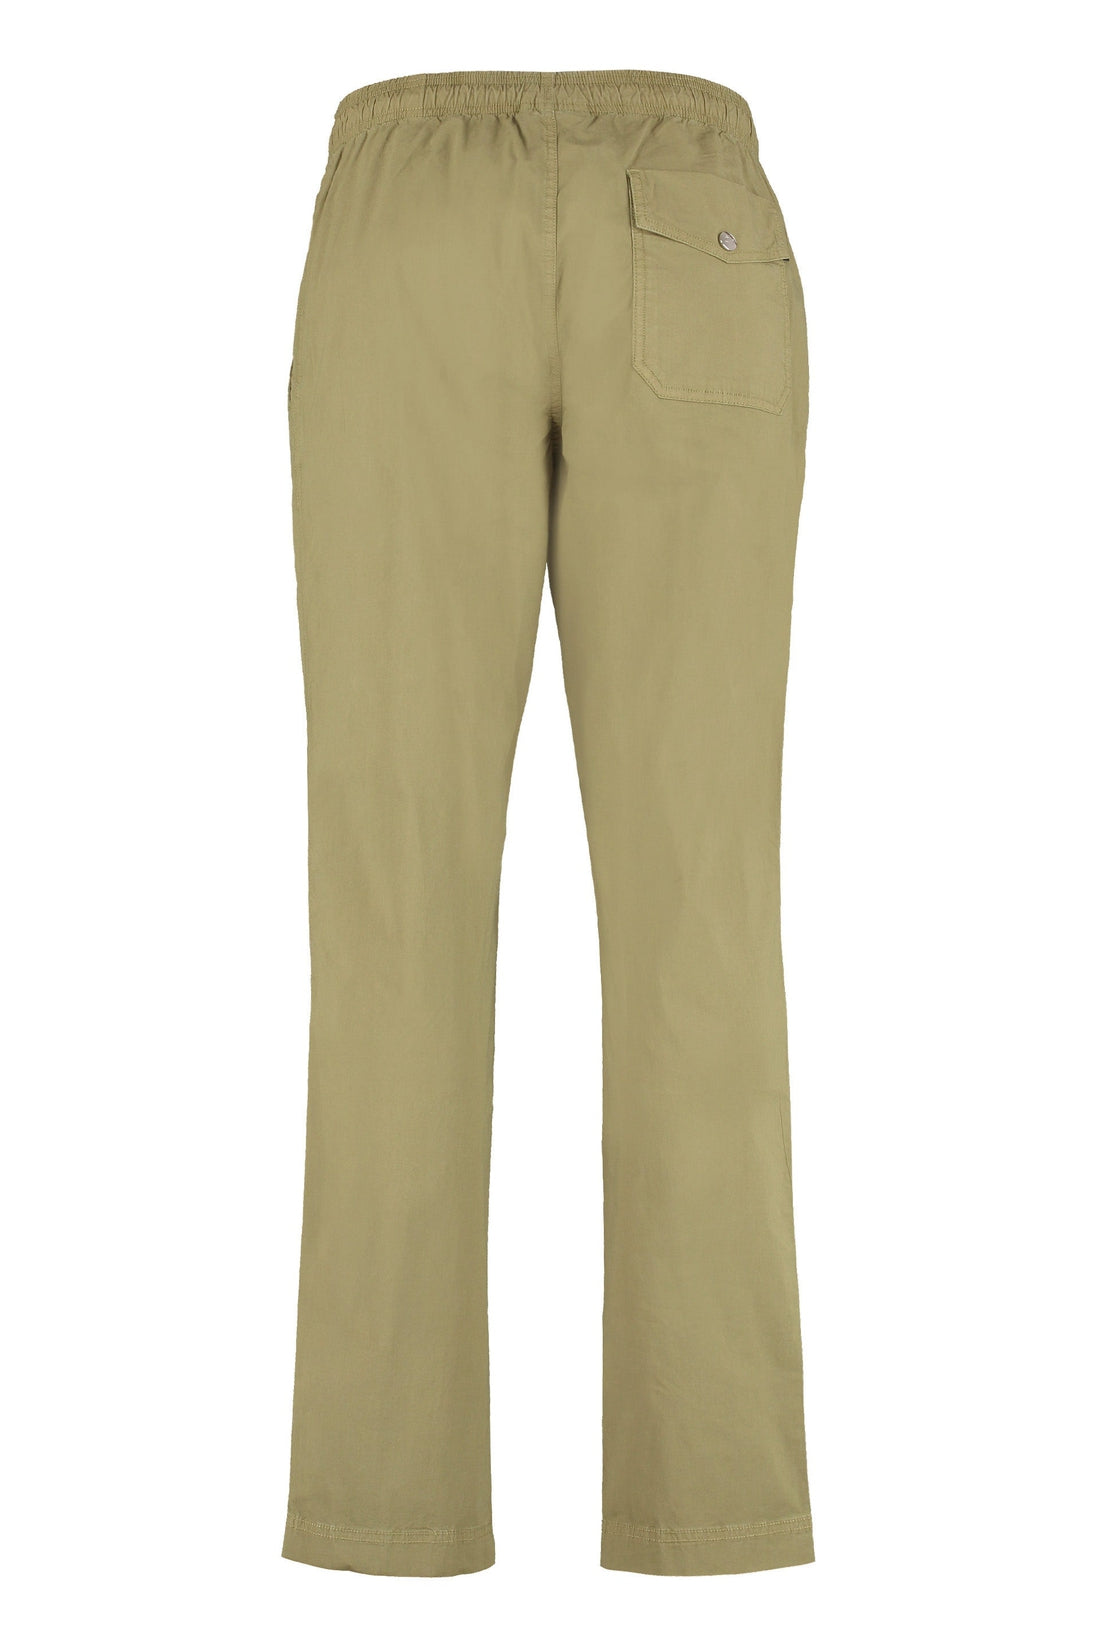 Woolrich-OUTLET-SALE-Stretch cotton trousers-ARCHIVIST